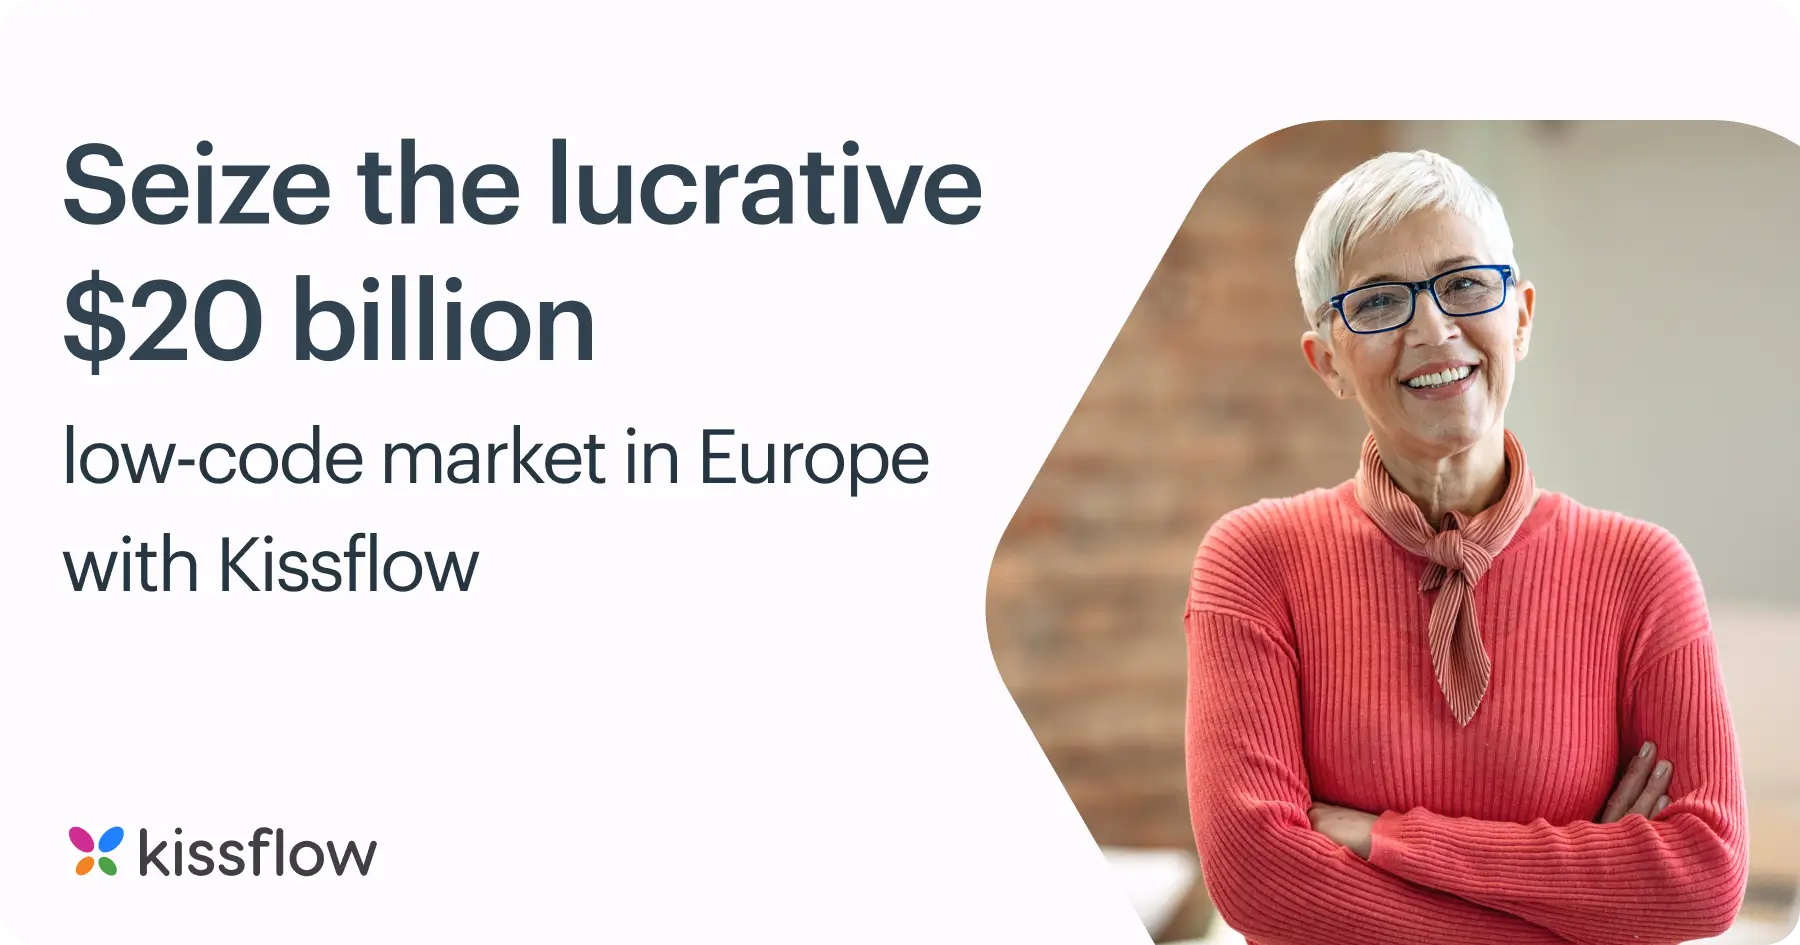 Seize the lucrative $20 billion low-code market in Europe with Kissflow